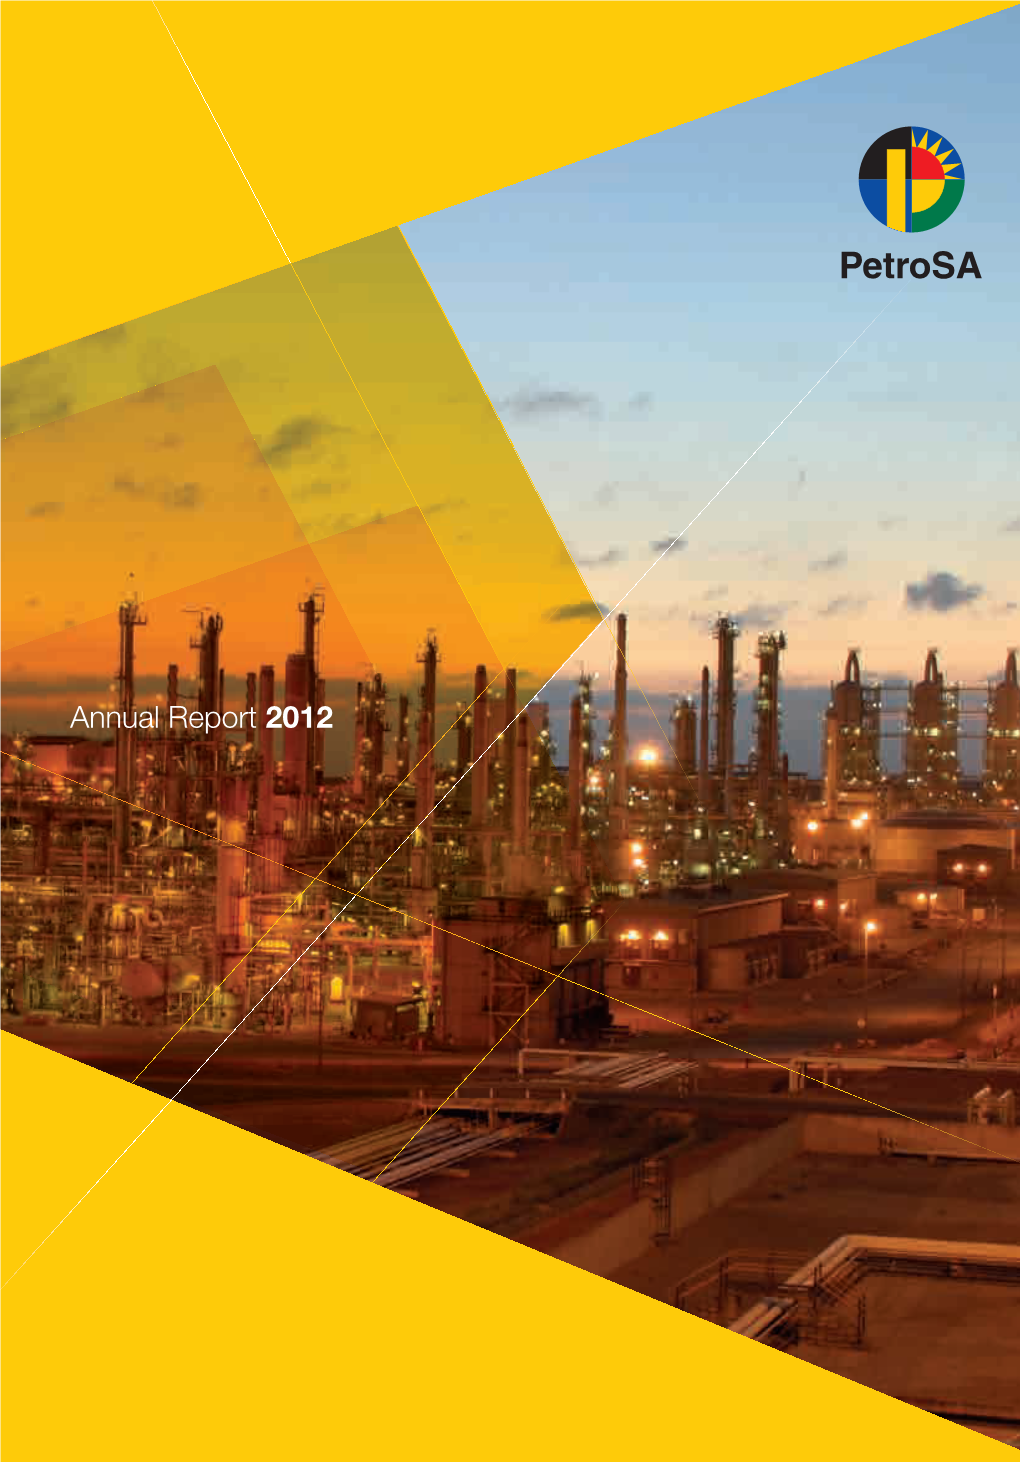 Annual Report Petrosa 2012